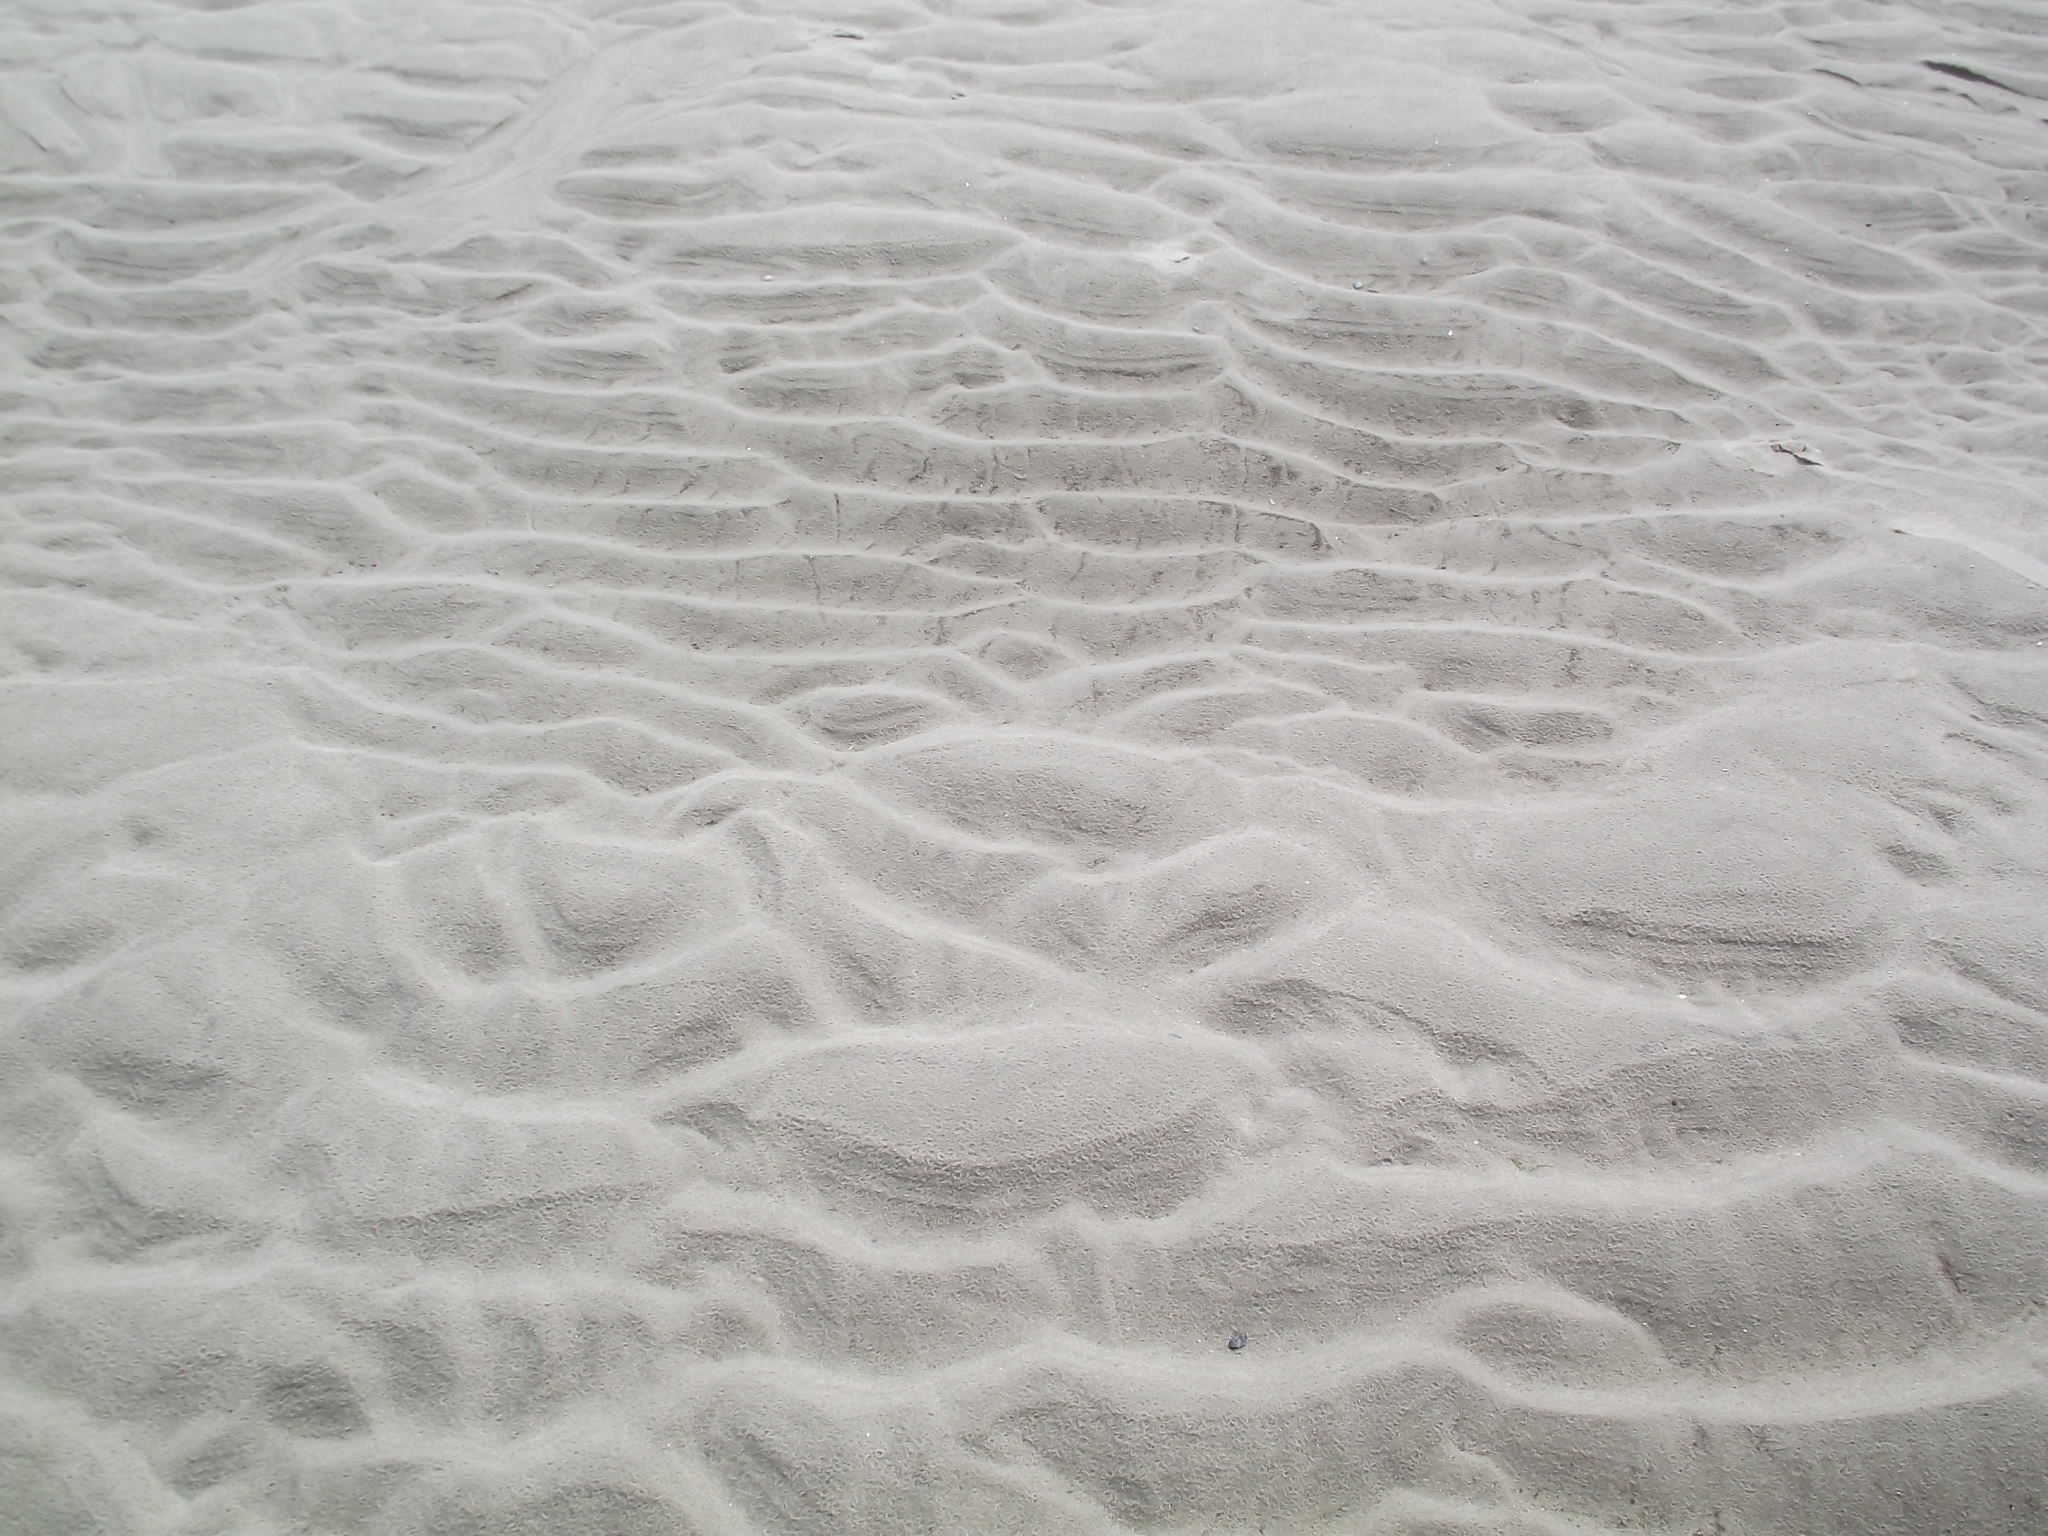 Wangerooge an der Nordsee - vom Wasser geformter Sandstrand